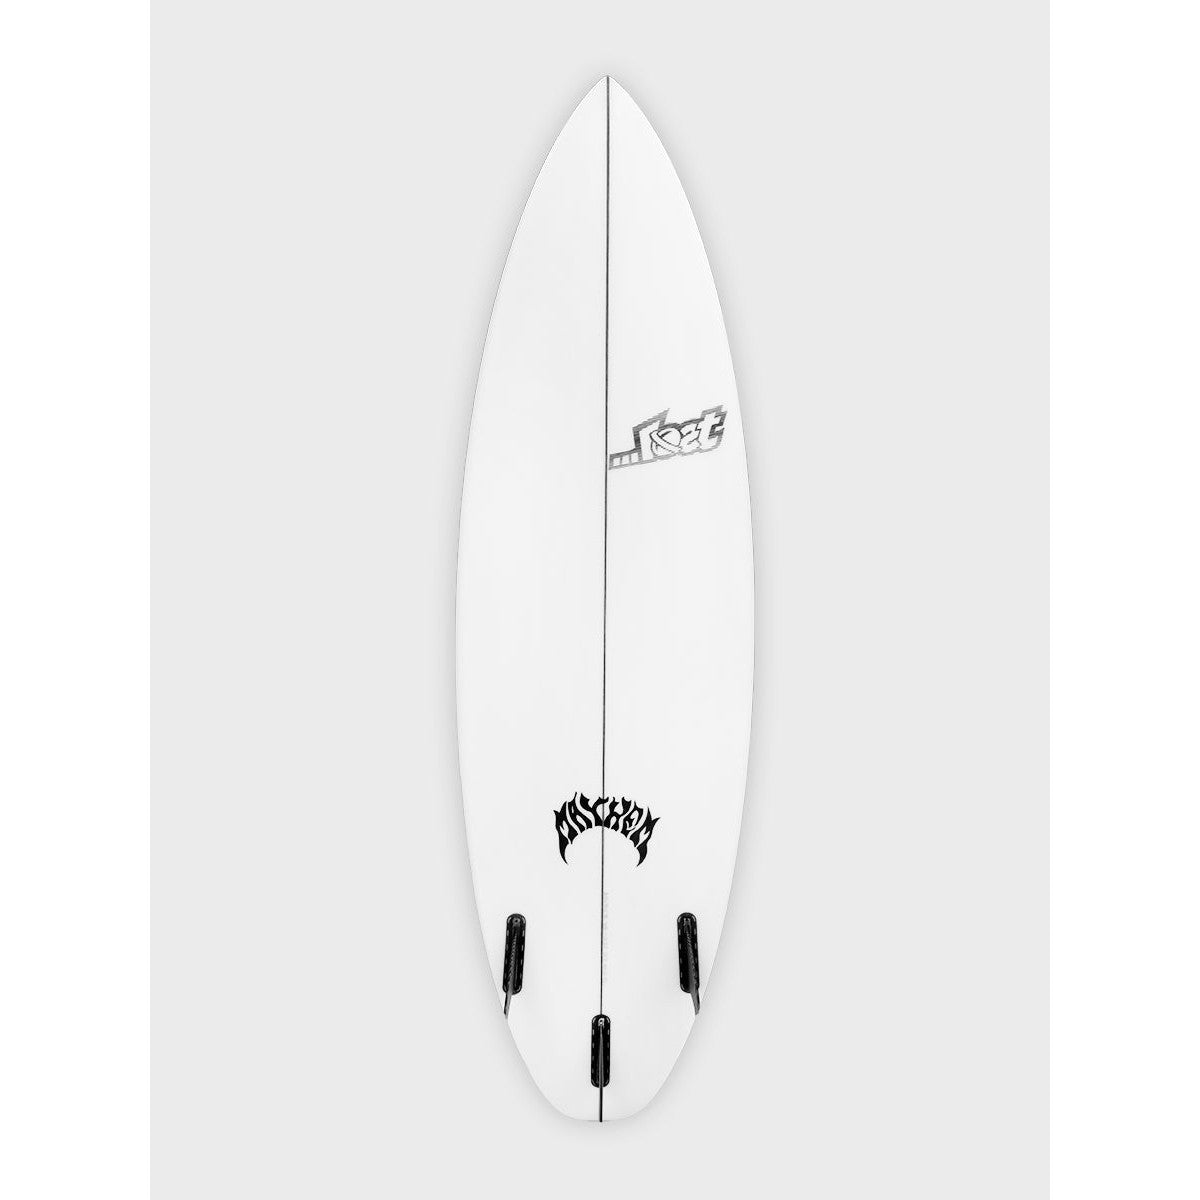 lost-surfboards-driver-3.0-squash-bottom-futures-galway-ireland-blacksheepsurfco